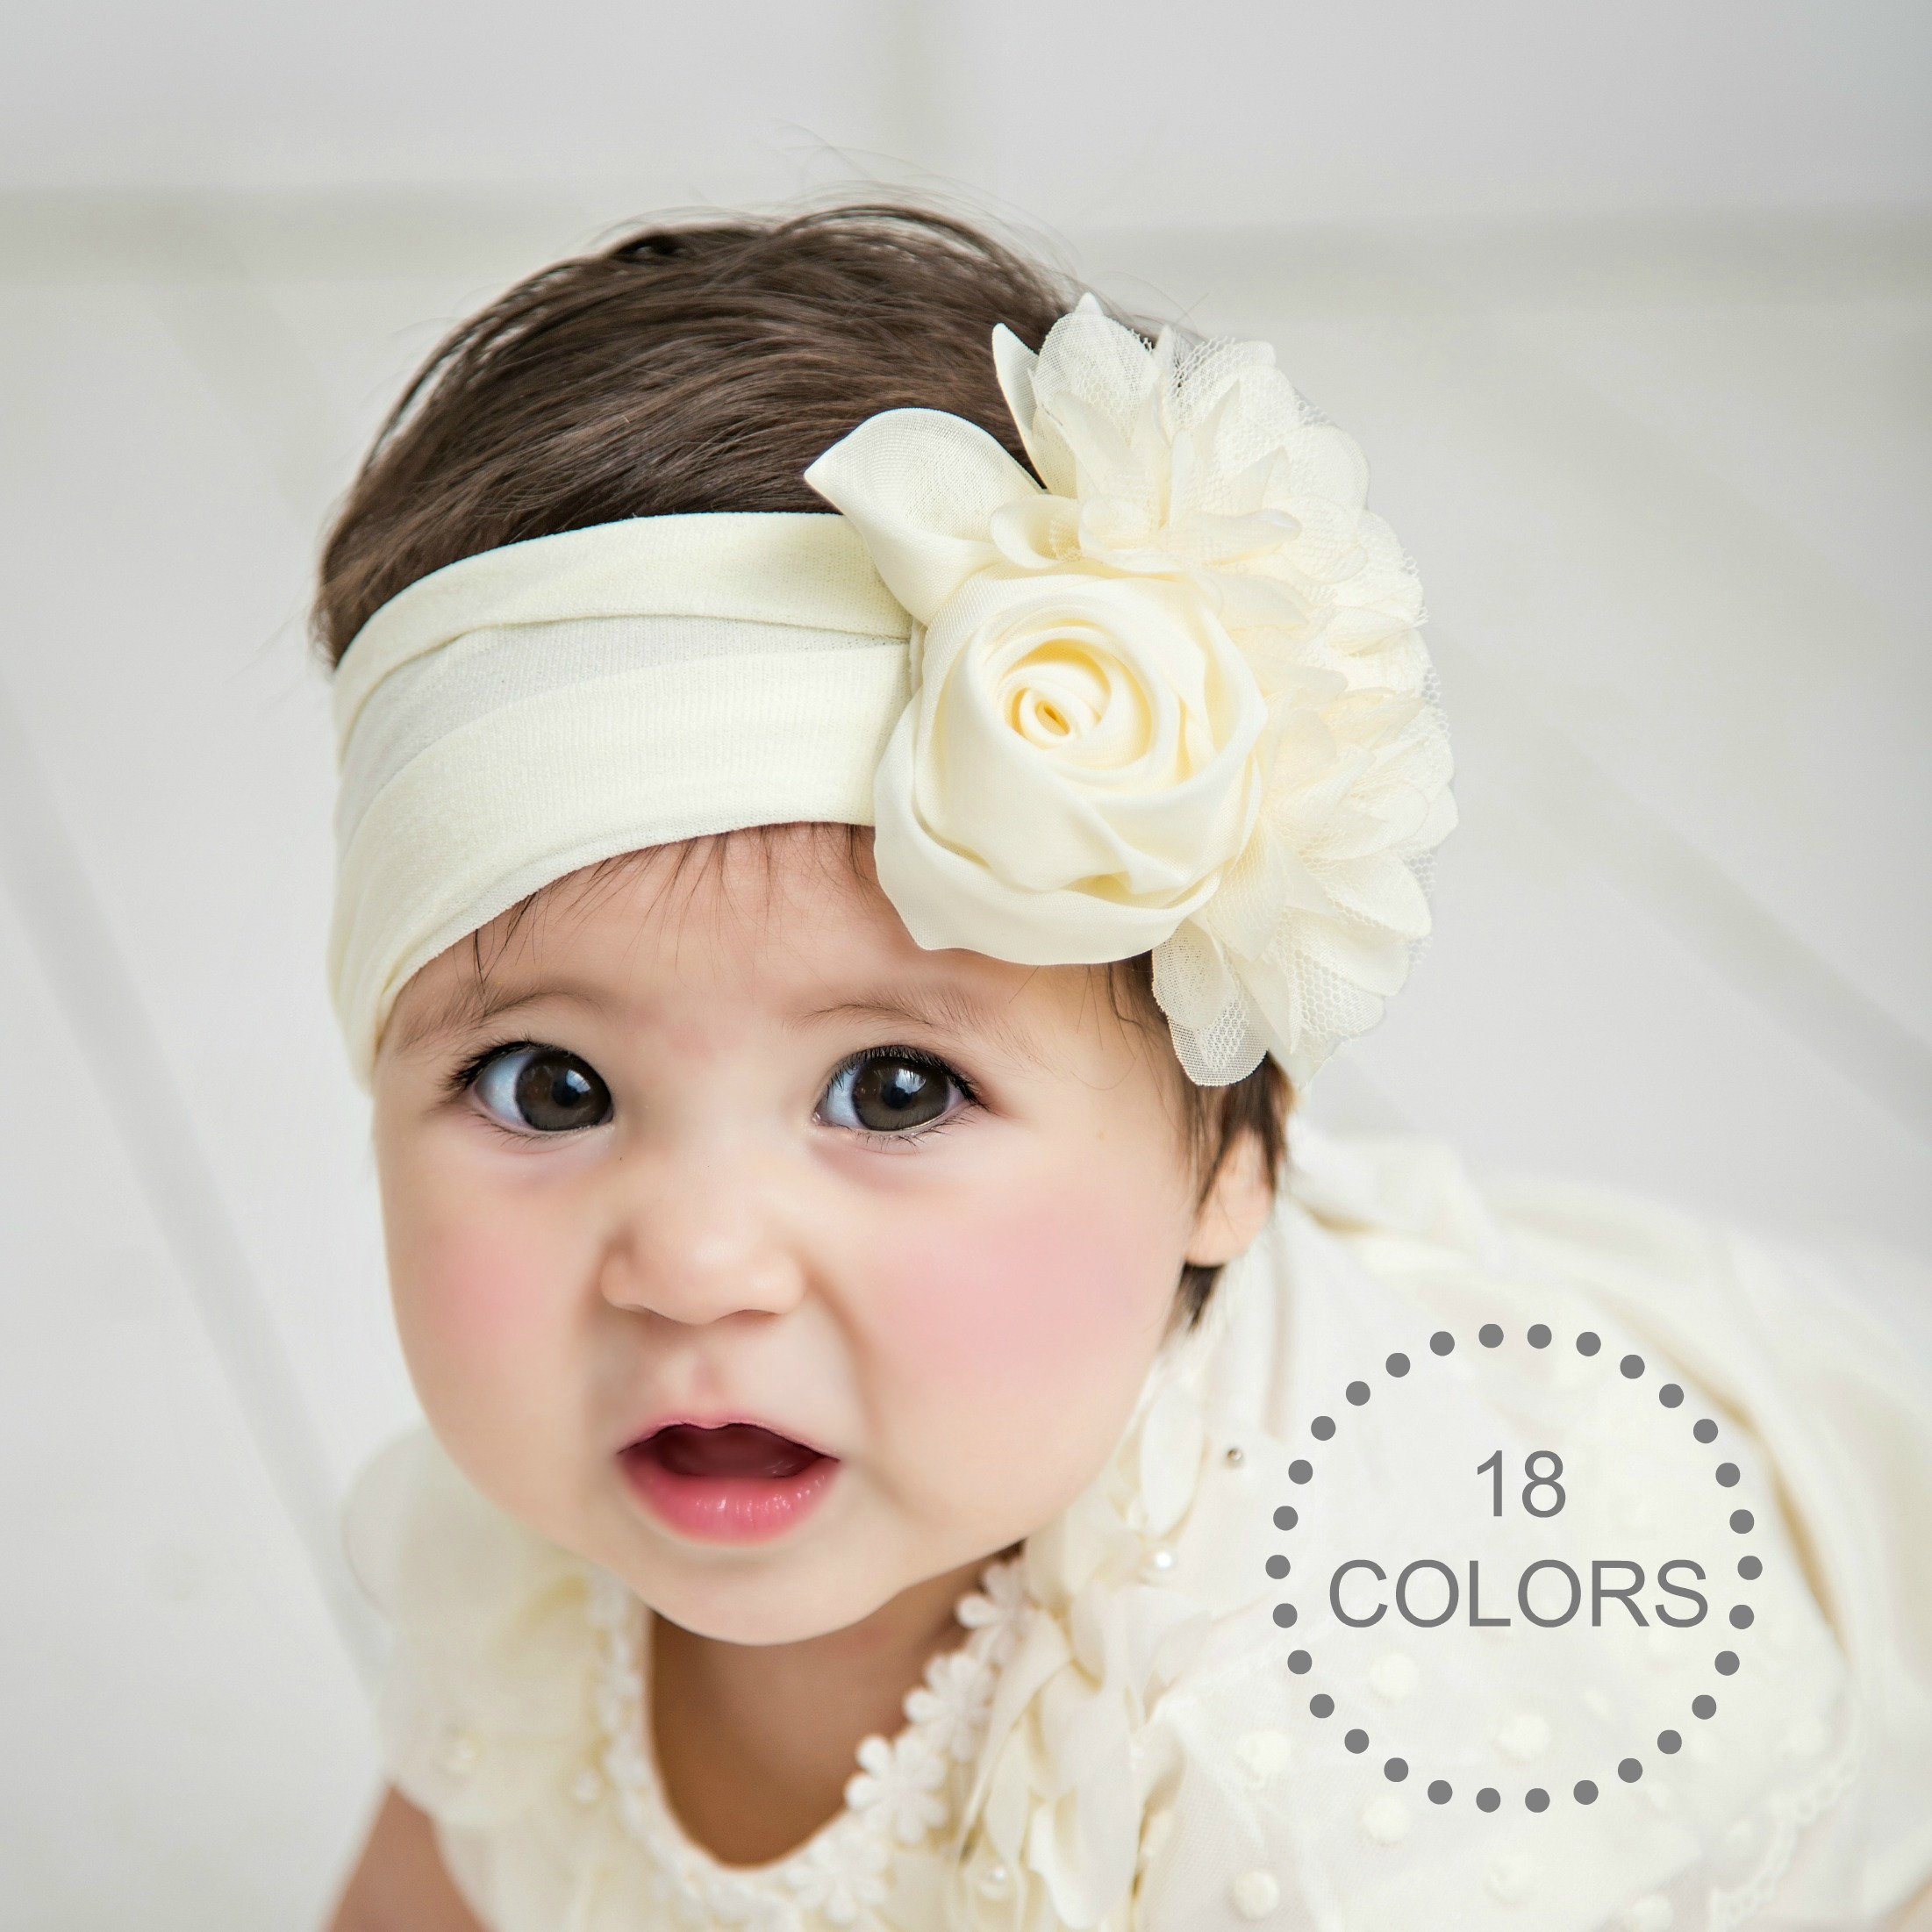 Kids Baby Nylon Headbands Girls Flower Bow Hairband Elastic Turban Head Wraps